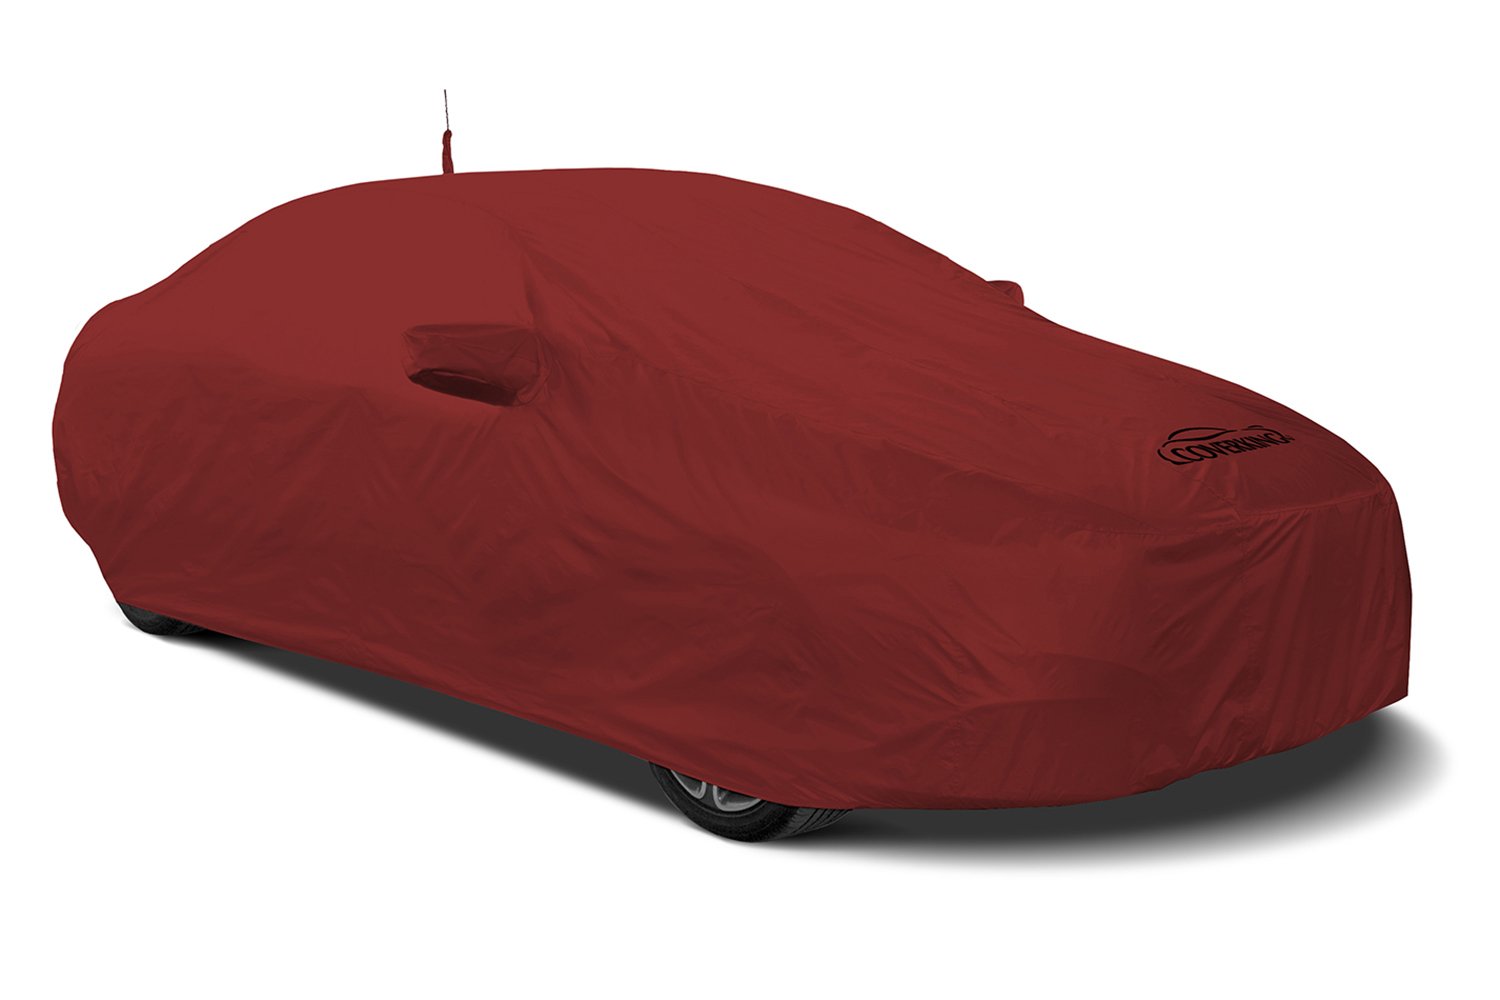 2010-2015 Camaro CoverKing Stormproof Car Cover